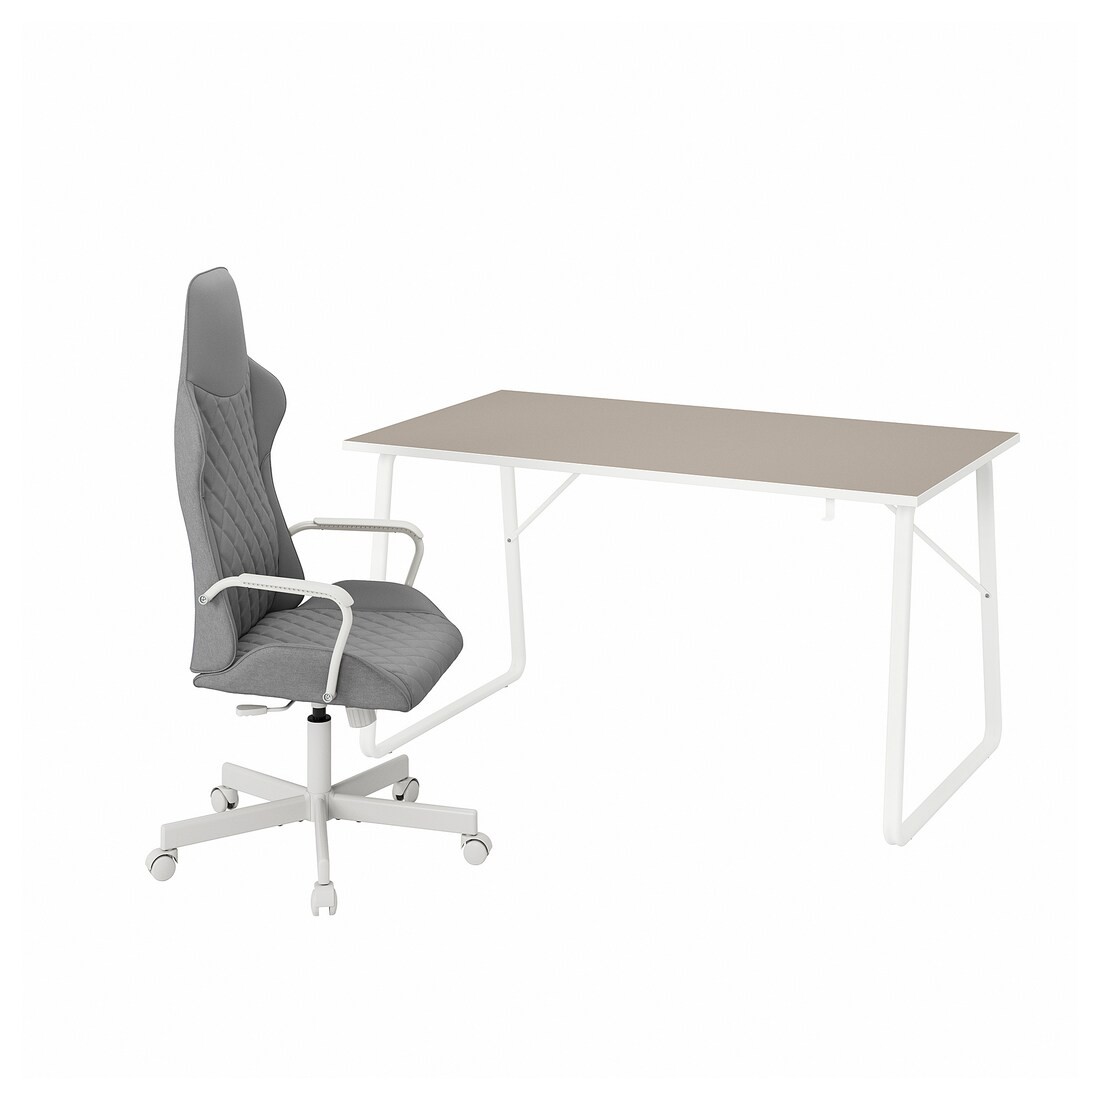 HUVUDSPELARE / UTESPELARE Геймерский стол и стул, бежевый / серый